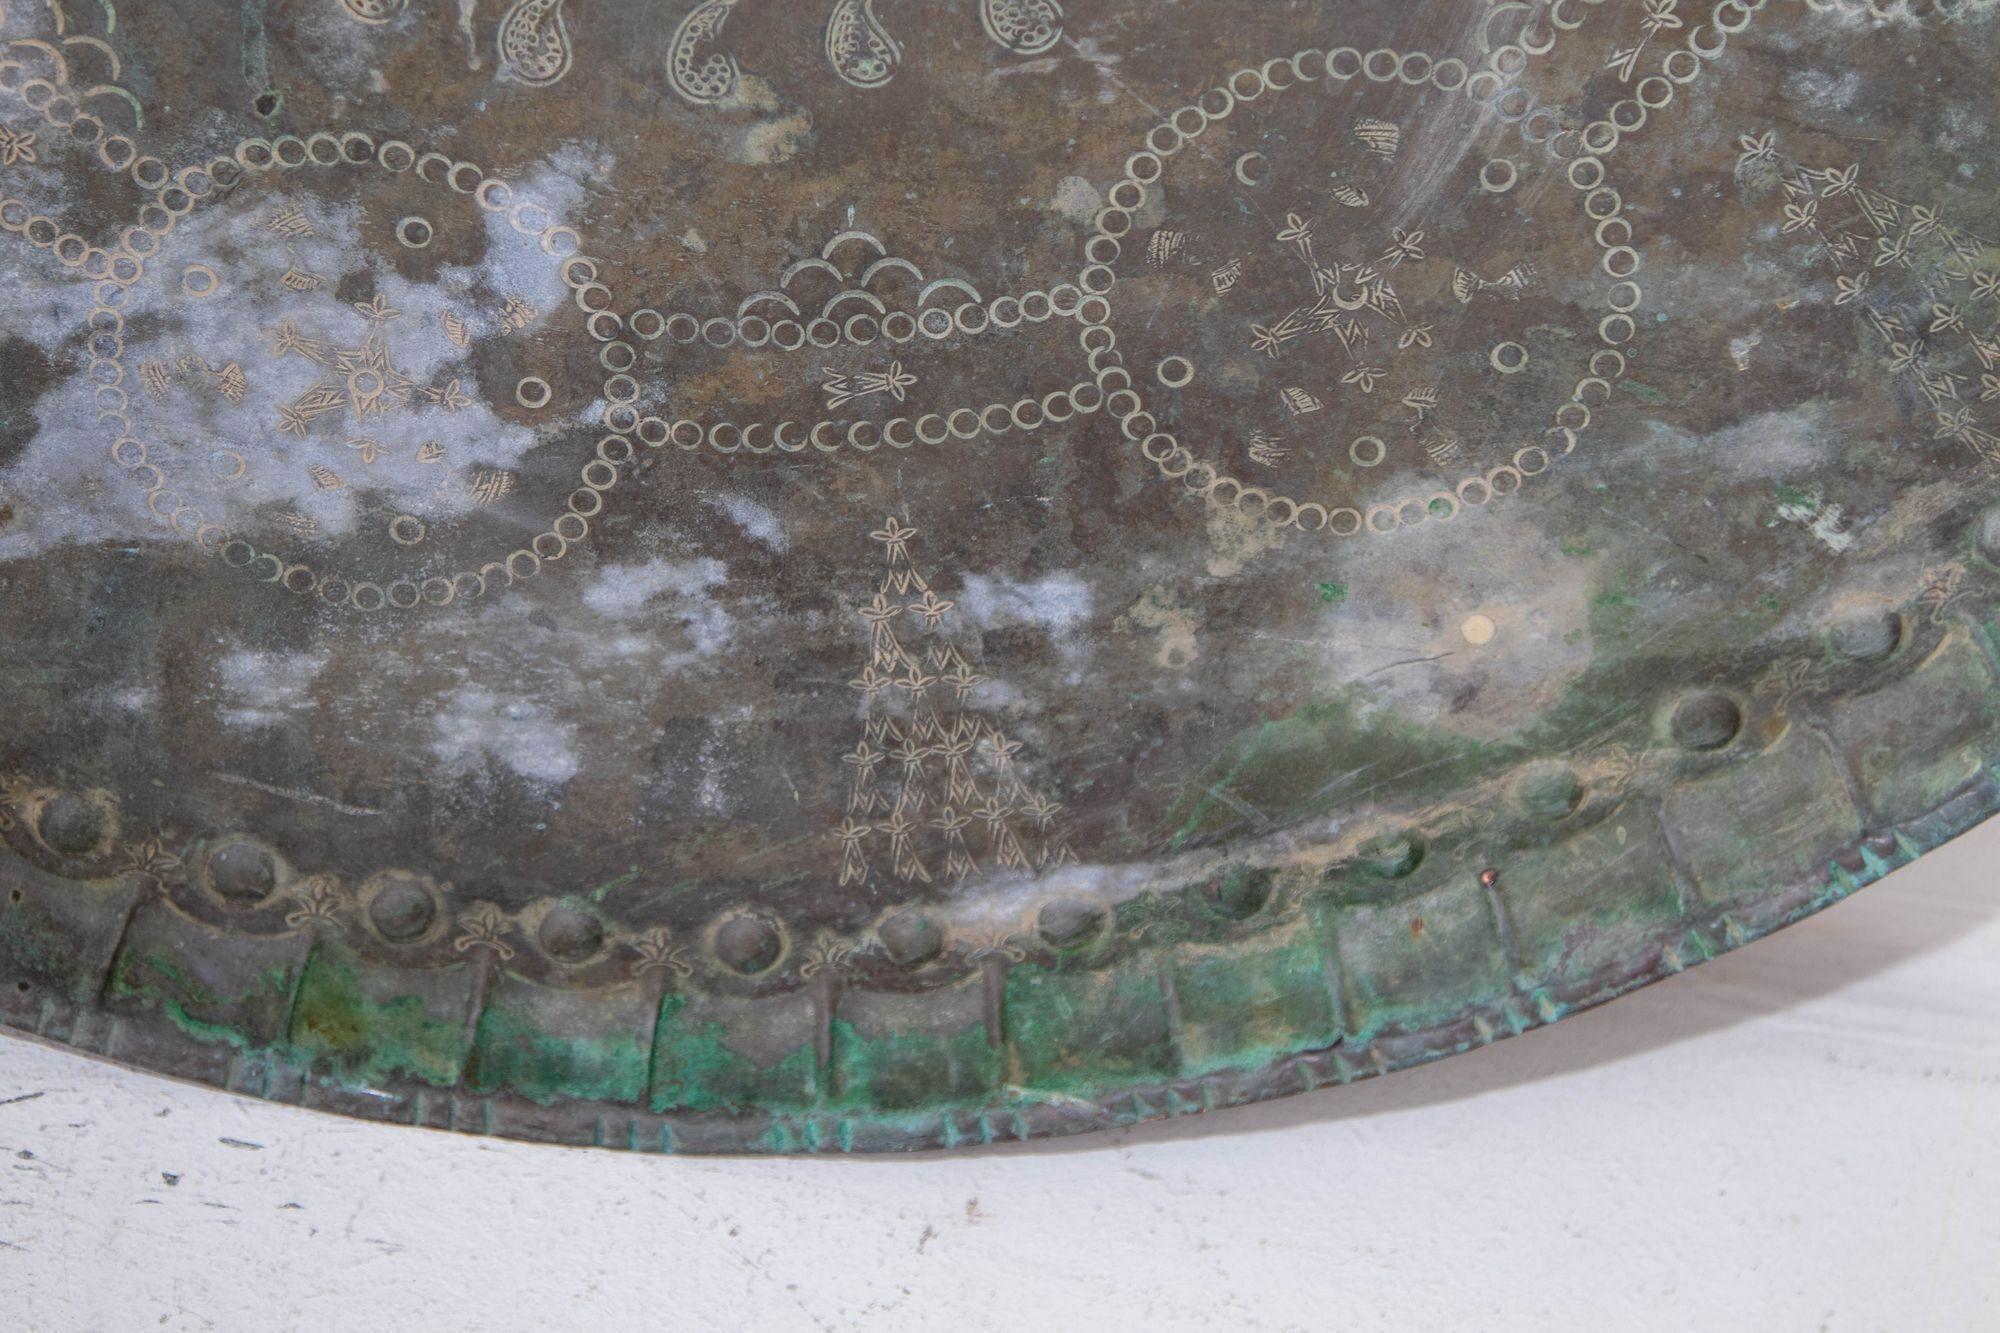 Antique Monumental Asian Turkish Moorish Tinned Copper Round Islamic Tray 19th C For Sale 6